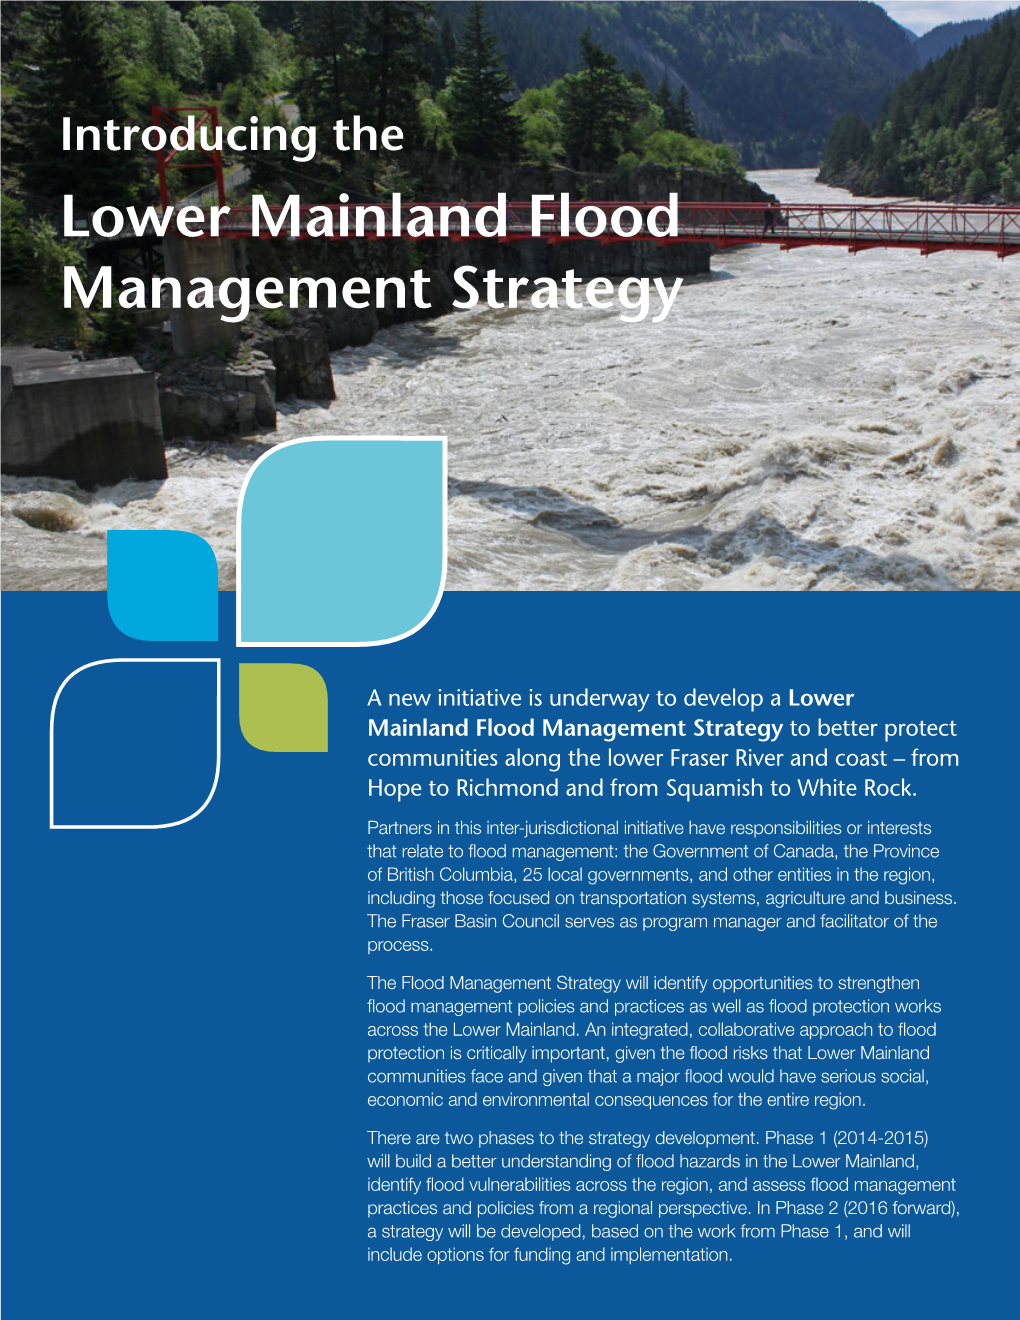 Lower Mainland Flood Management Strategy